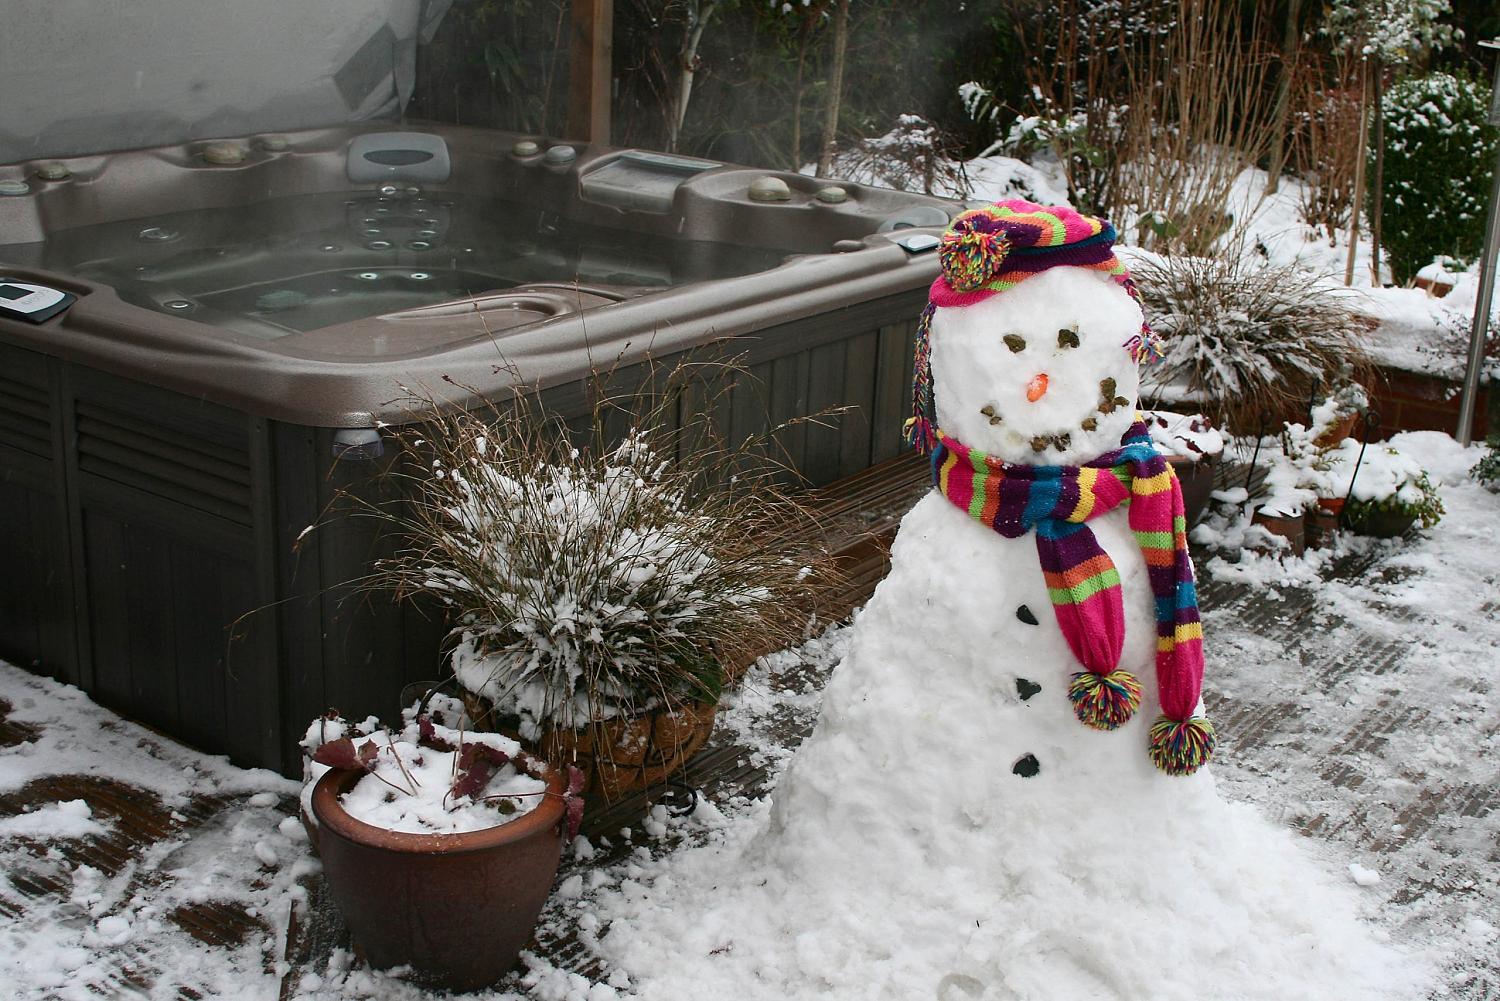 https://www.spastores.com/wp-content/uploads/2019/11/Hot-tub-snowman-scaled.jpg